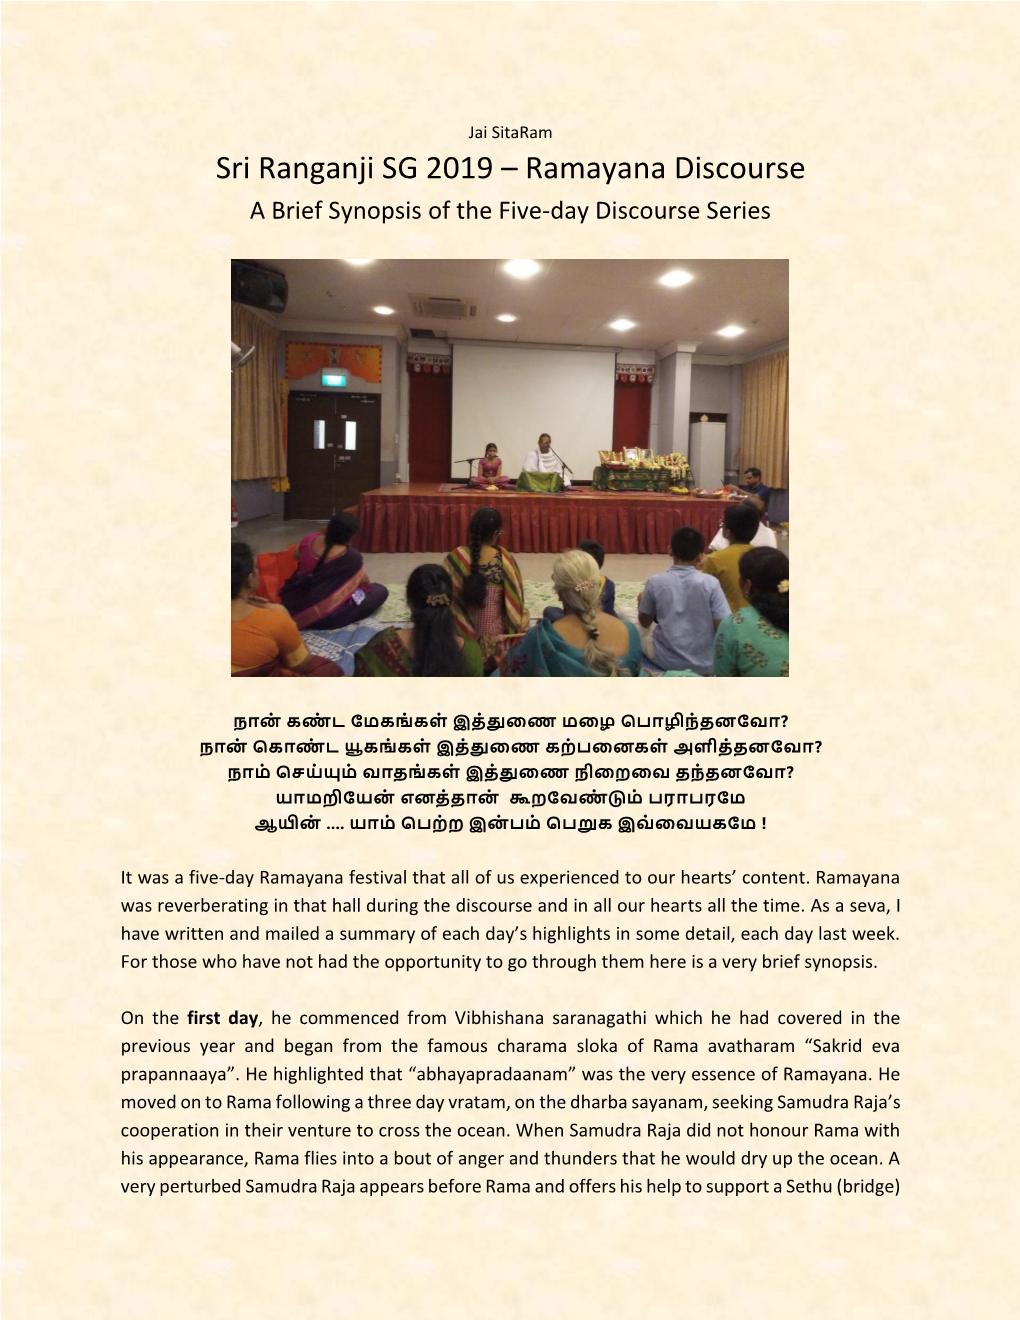 Sri Ranganji SG 2019 – Ramayana Discourse a Brief Synopsis of the Five-Day Discourse Series